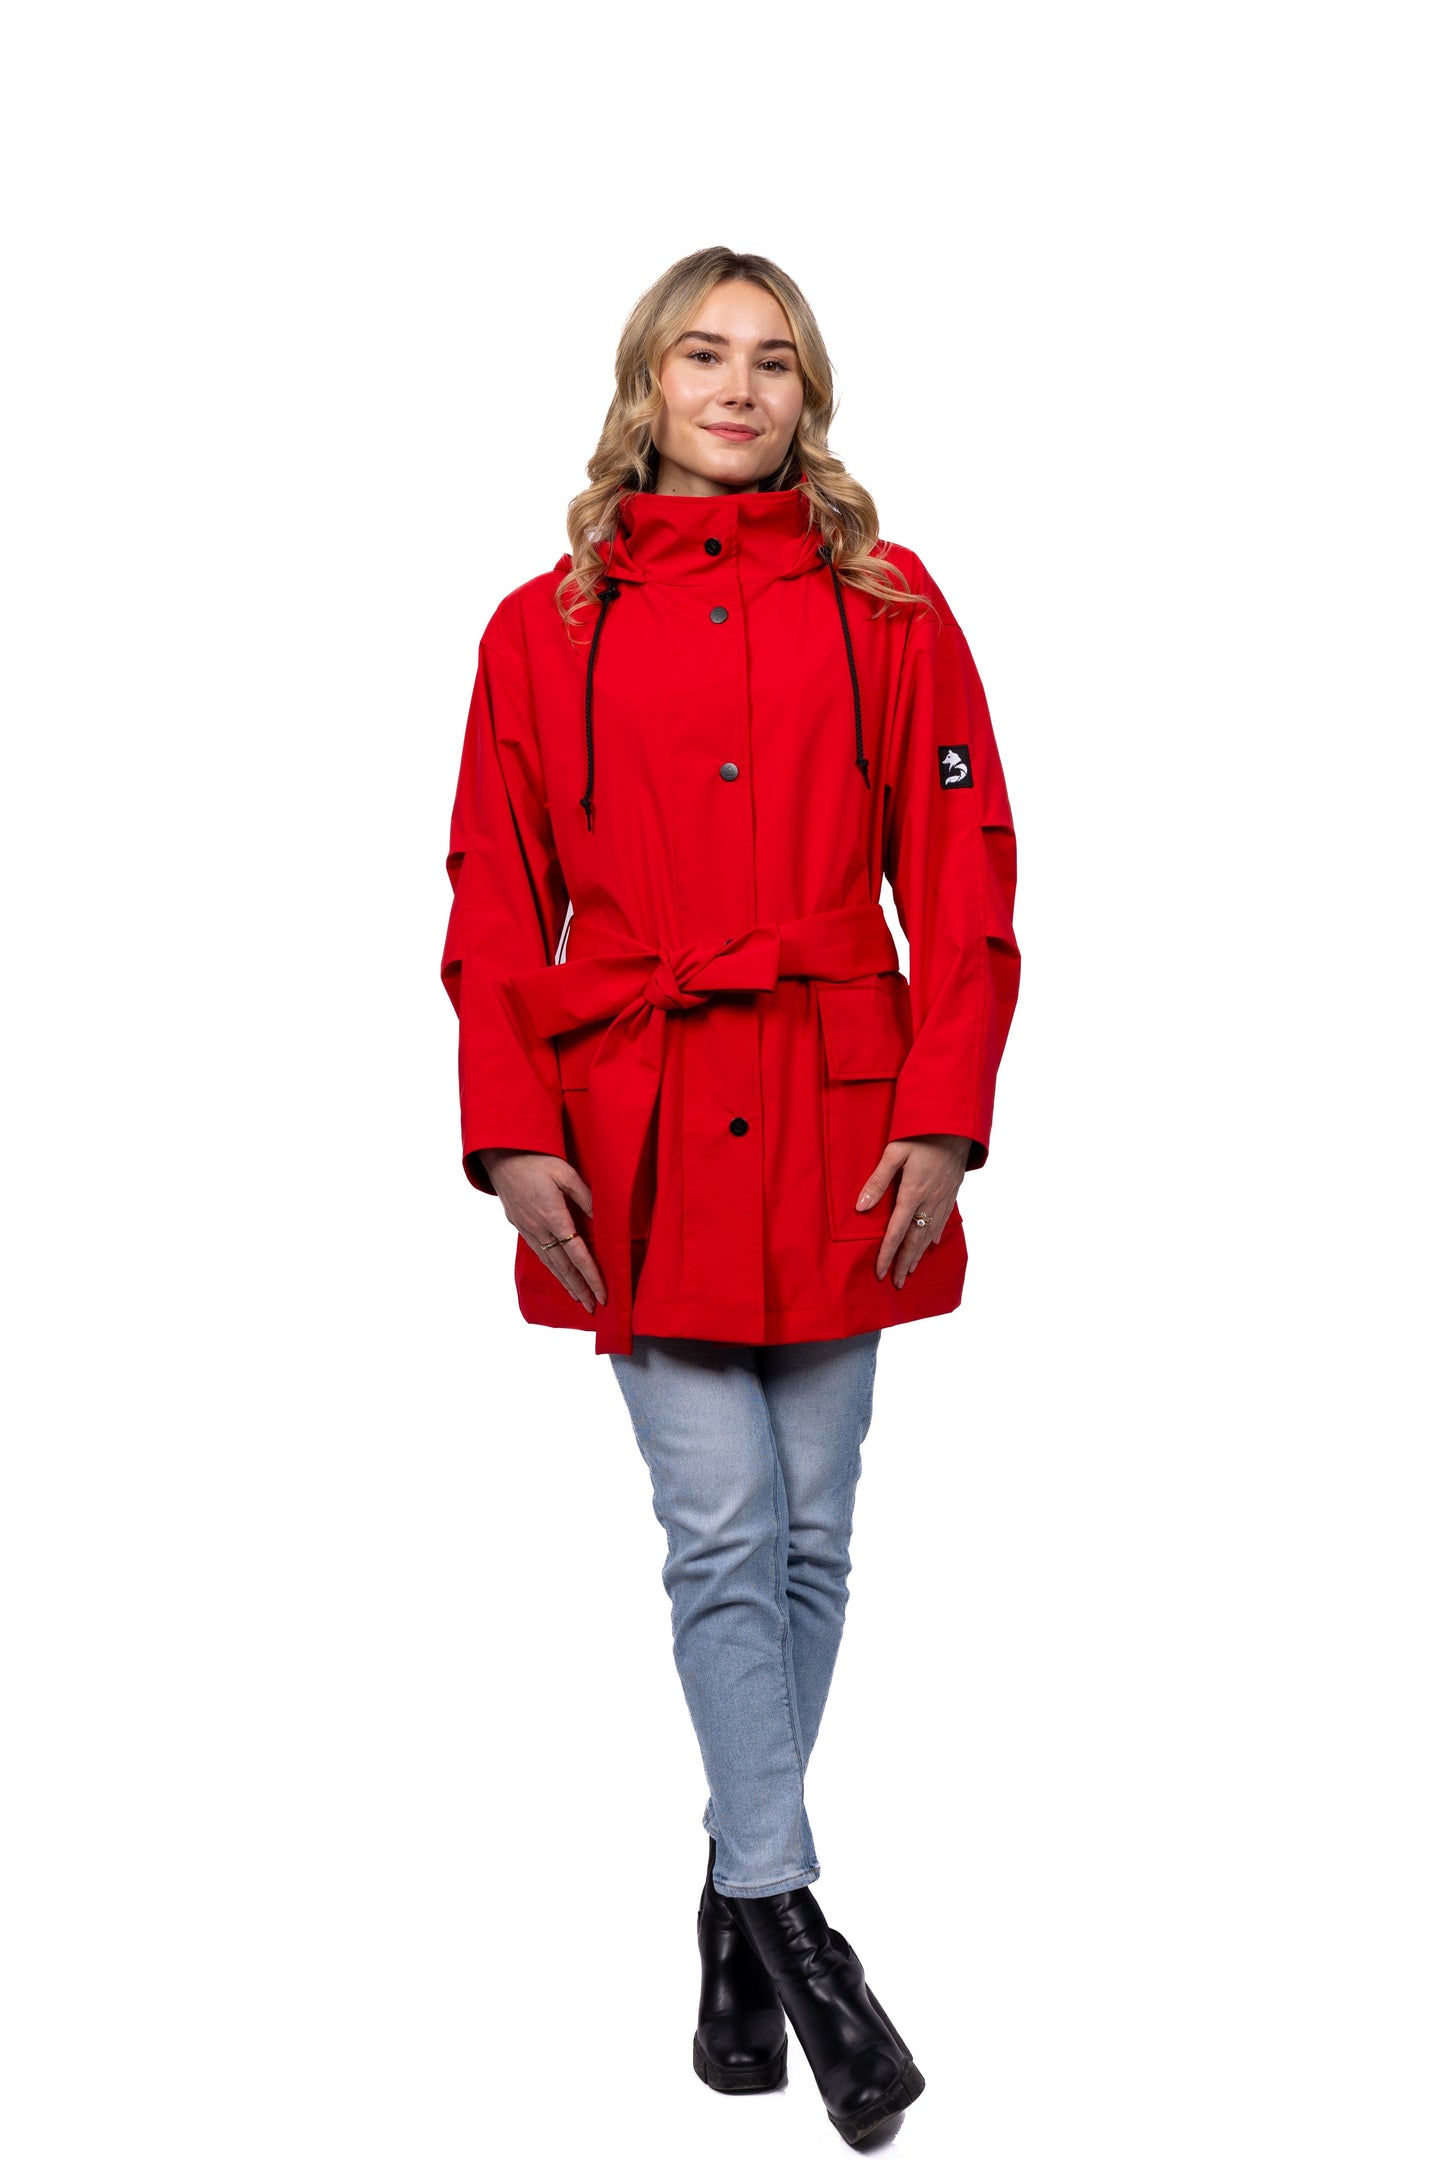 Desloups urban waterproof coat with hood, loose with belt for women - Navy 